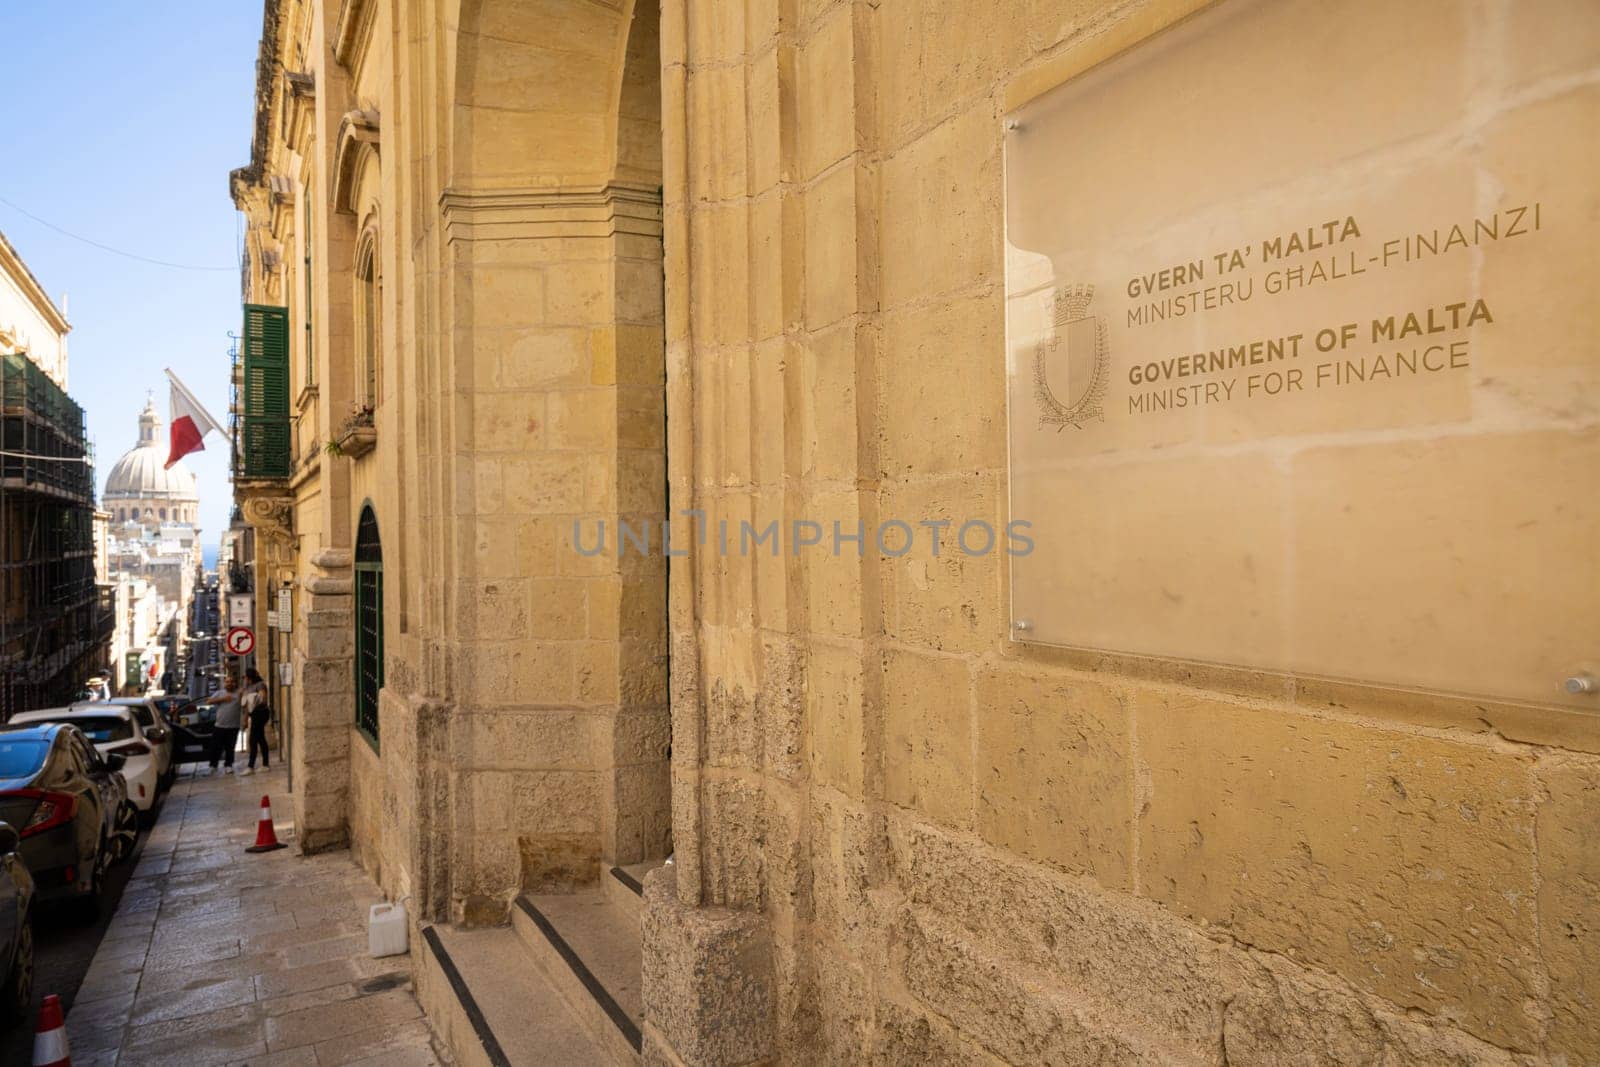 Ministry of finance in Valletta, Malta by sergiodv